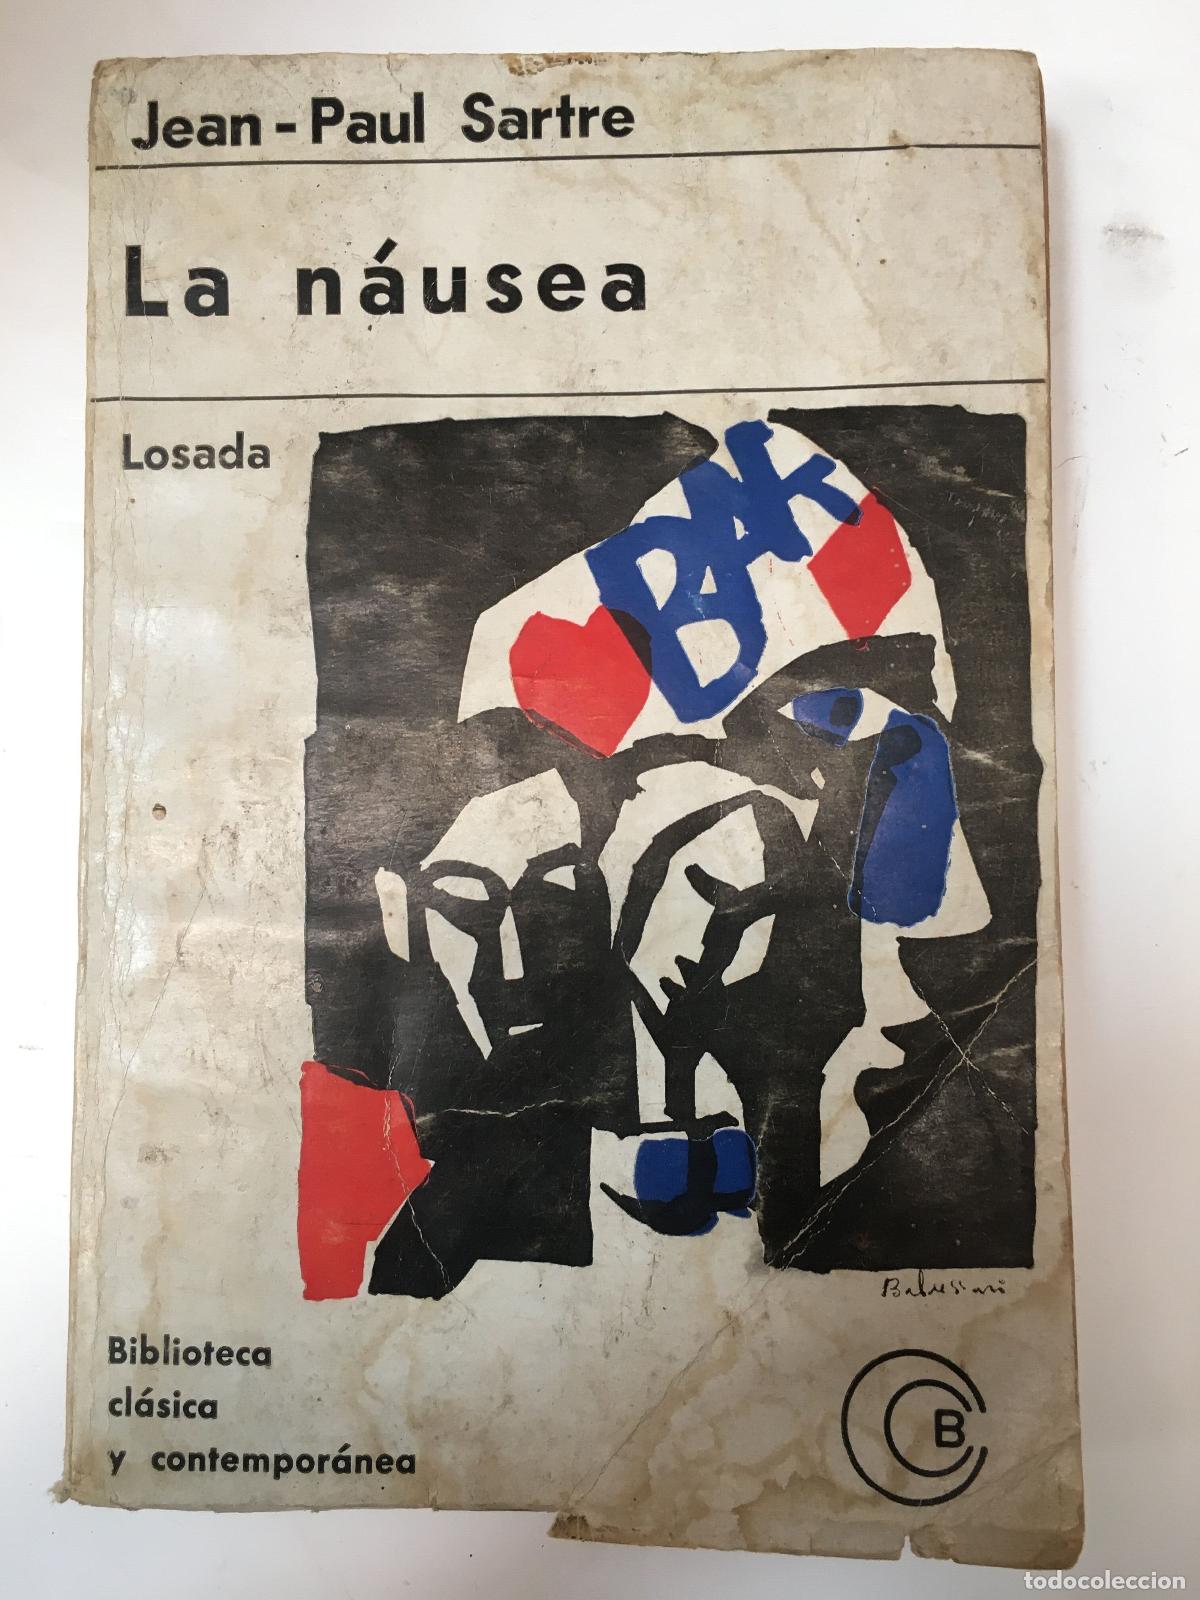 la nausea - jean paul sartre - Buy Unclassified used books on todocoleccion